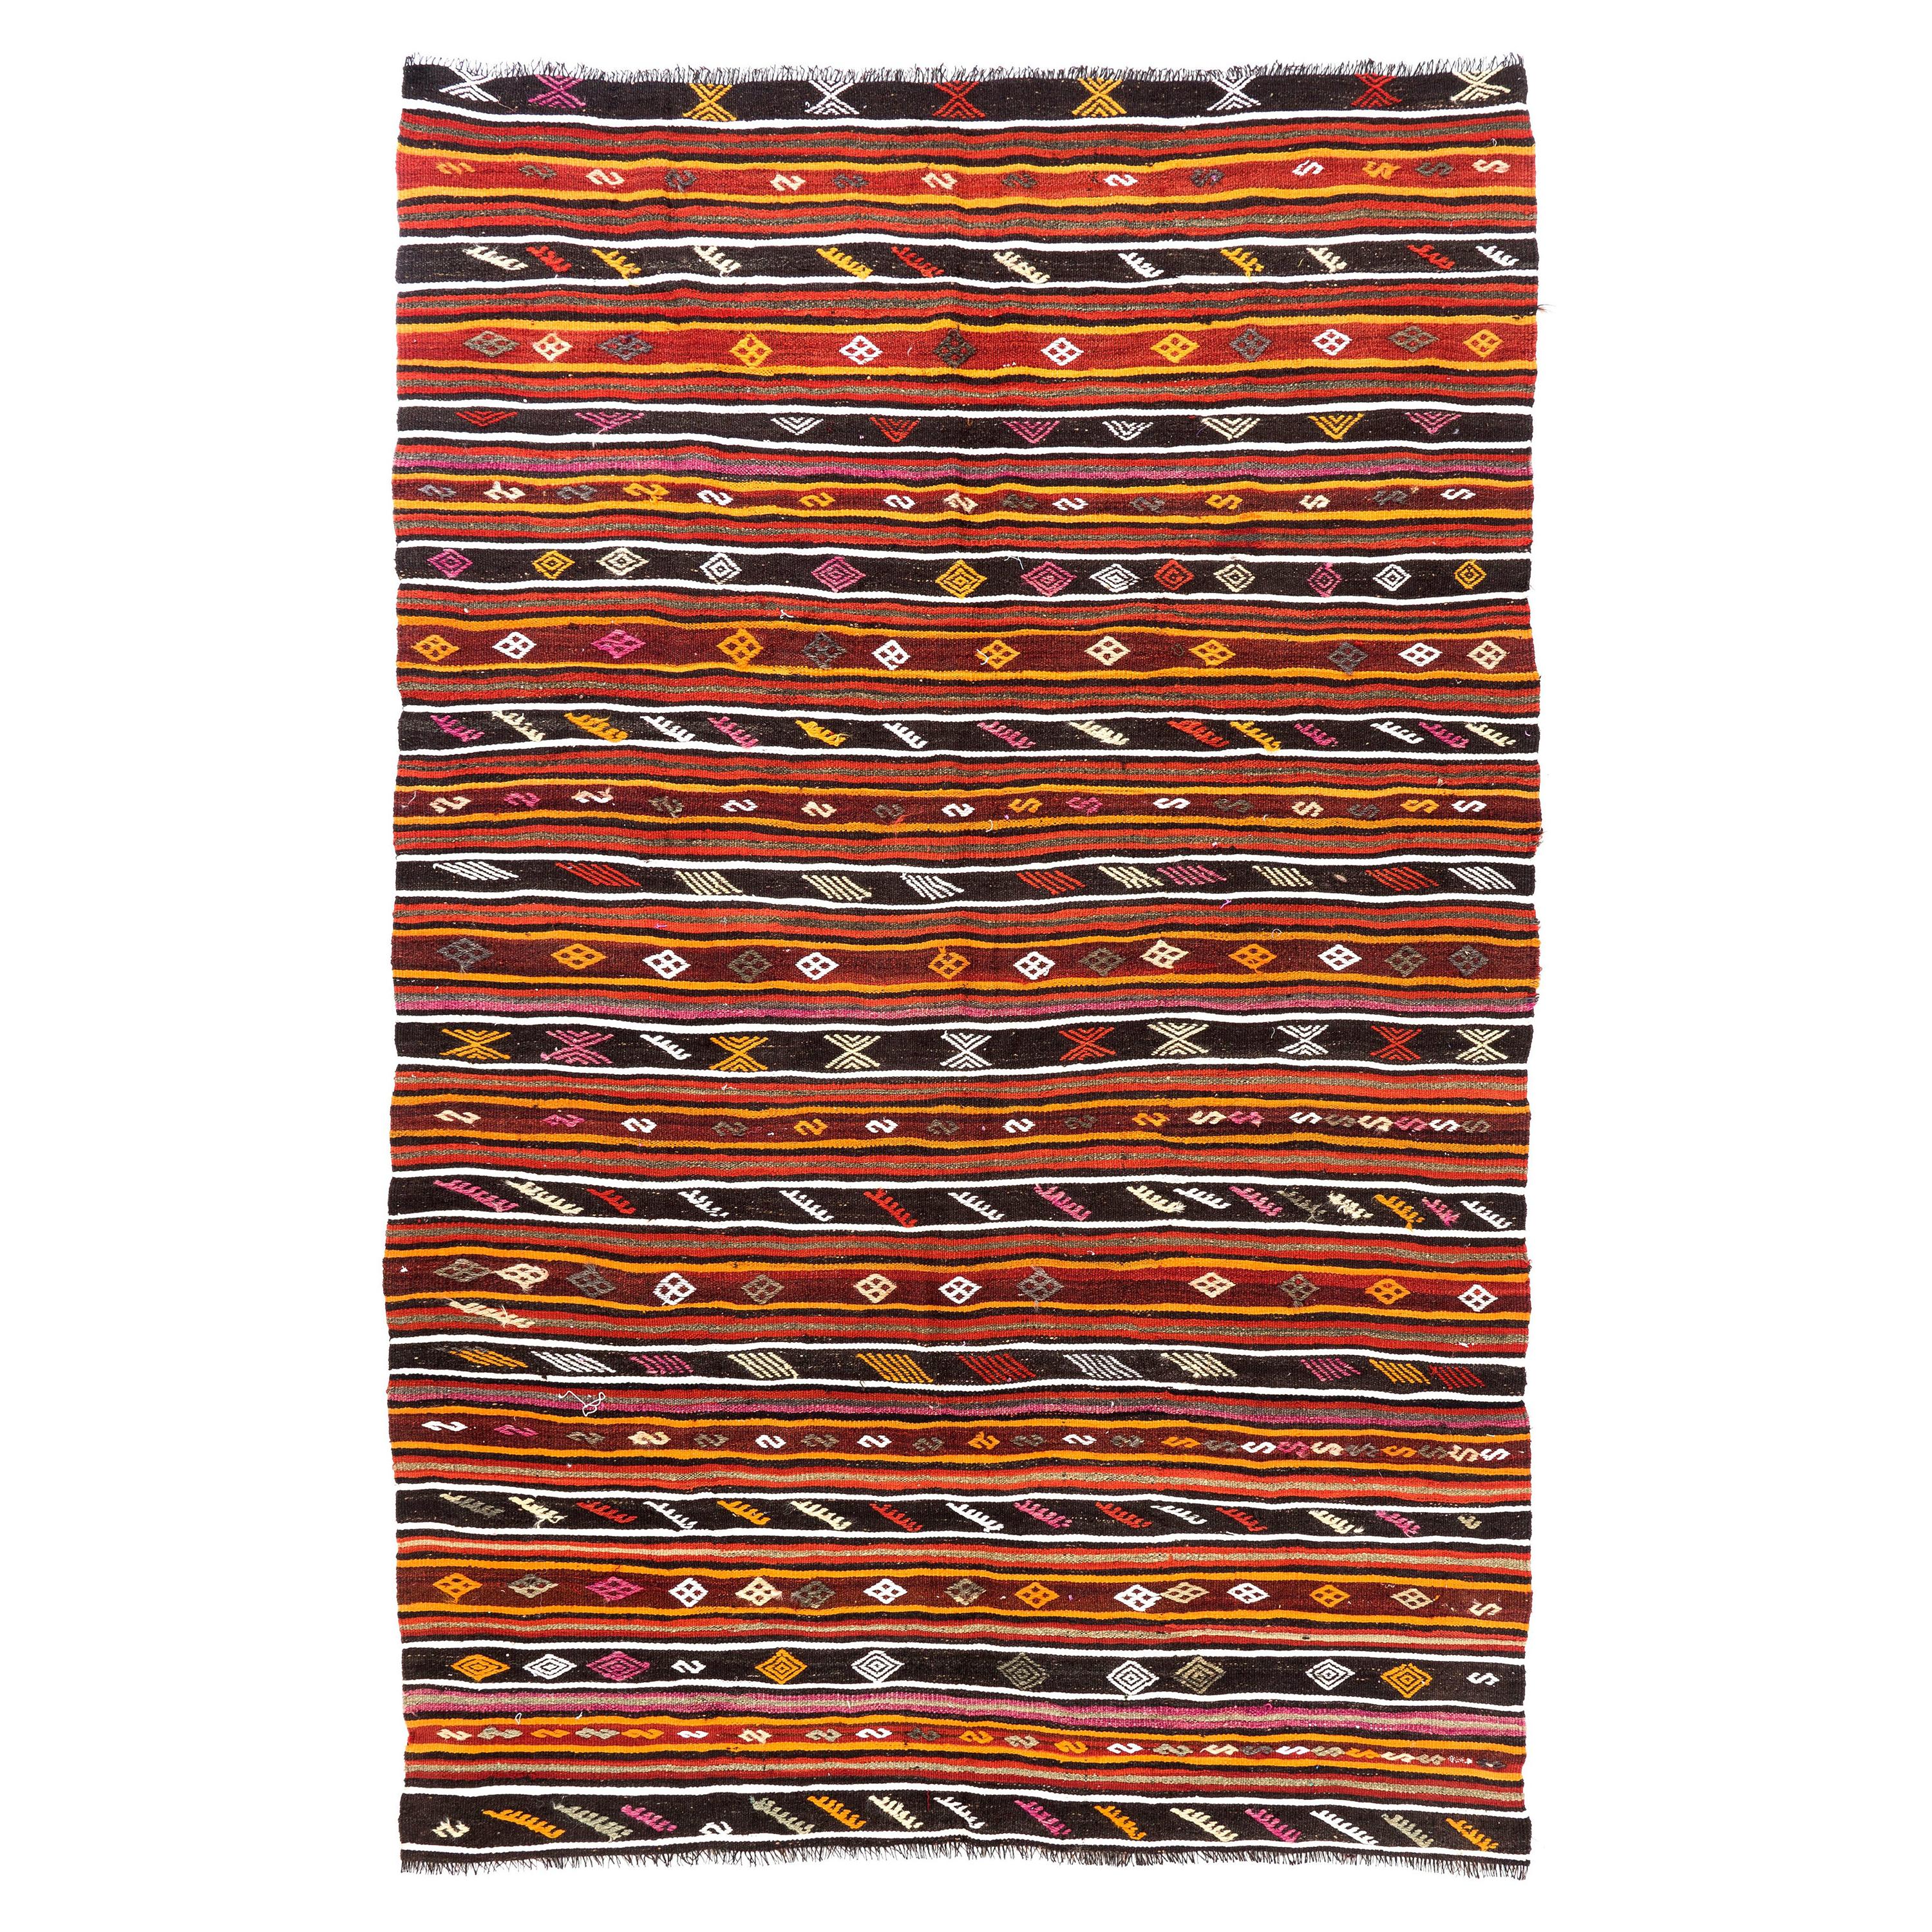 6.7x10 Ft Vintage Striped Kilim, Double Sided Flat-Weave Rug, Anatolian Carpet